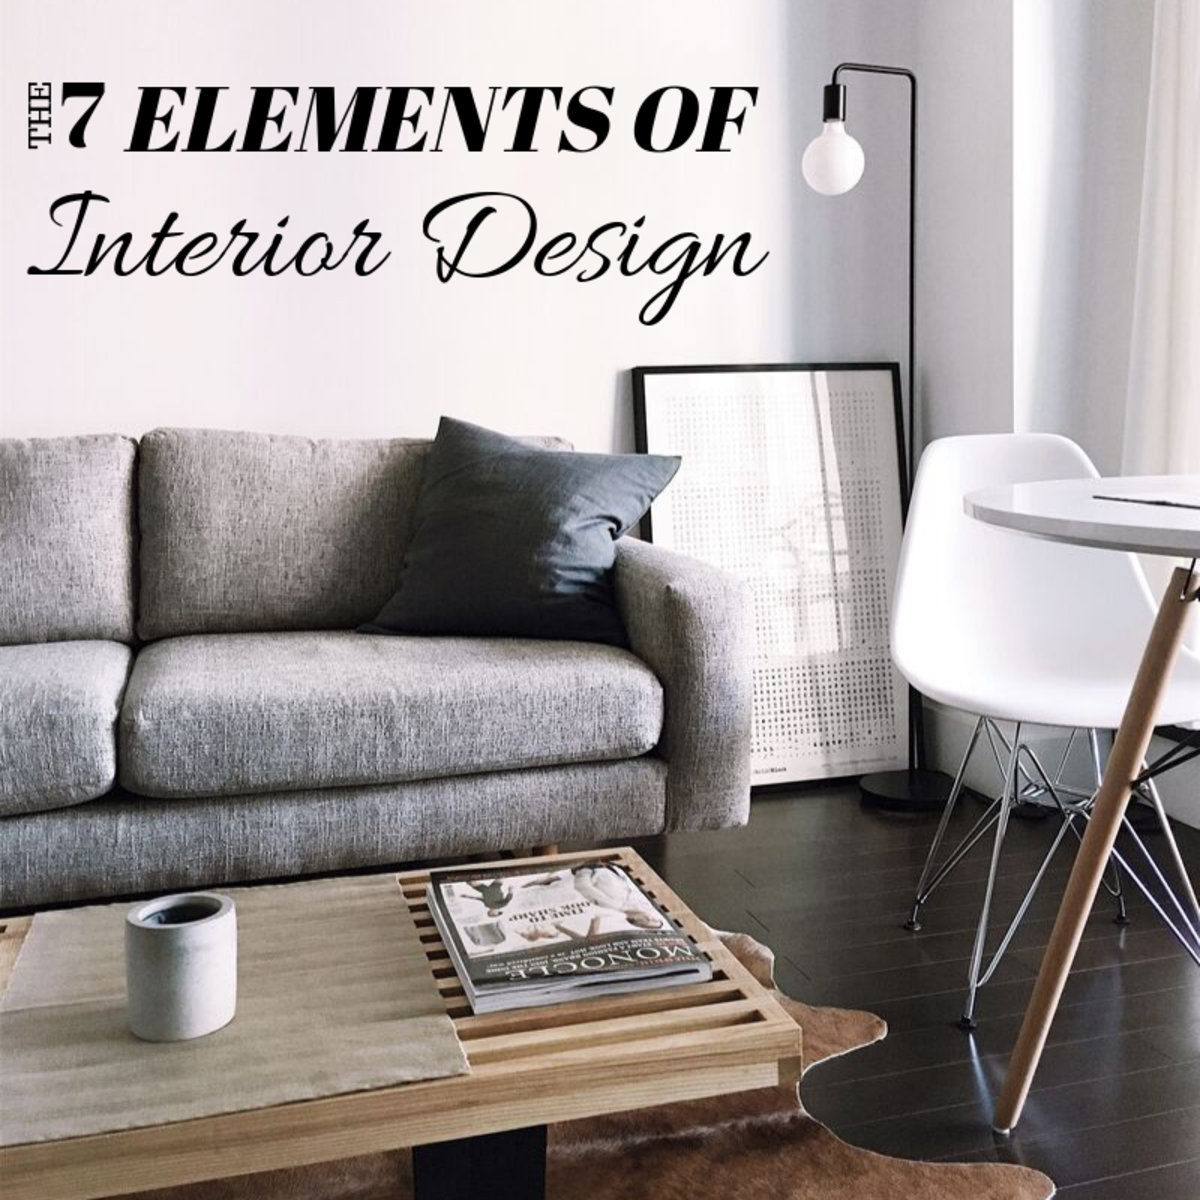 The Seven Elements of Interior Design